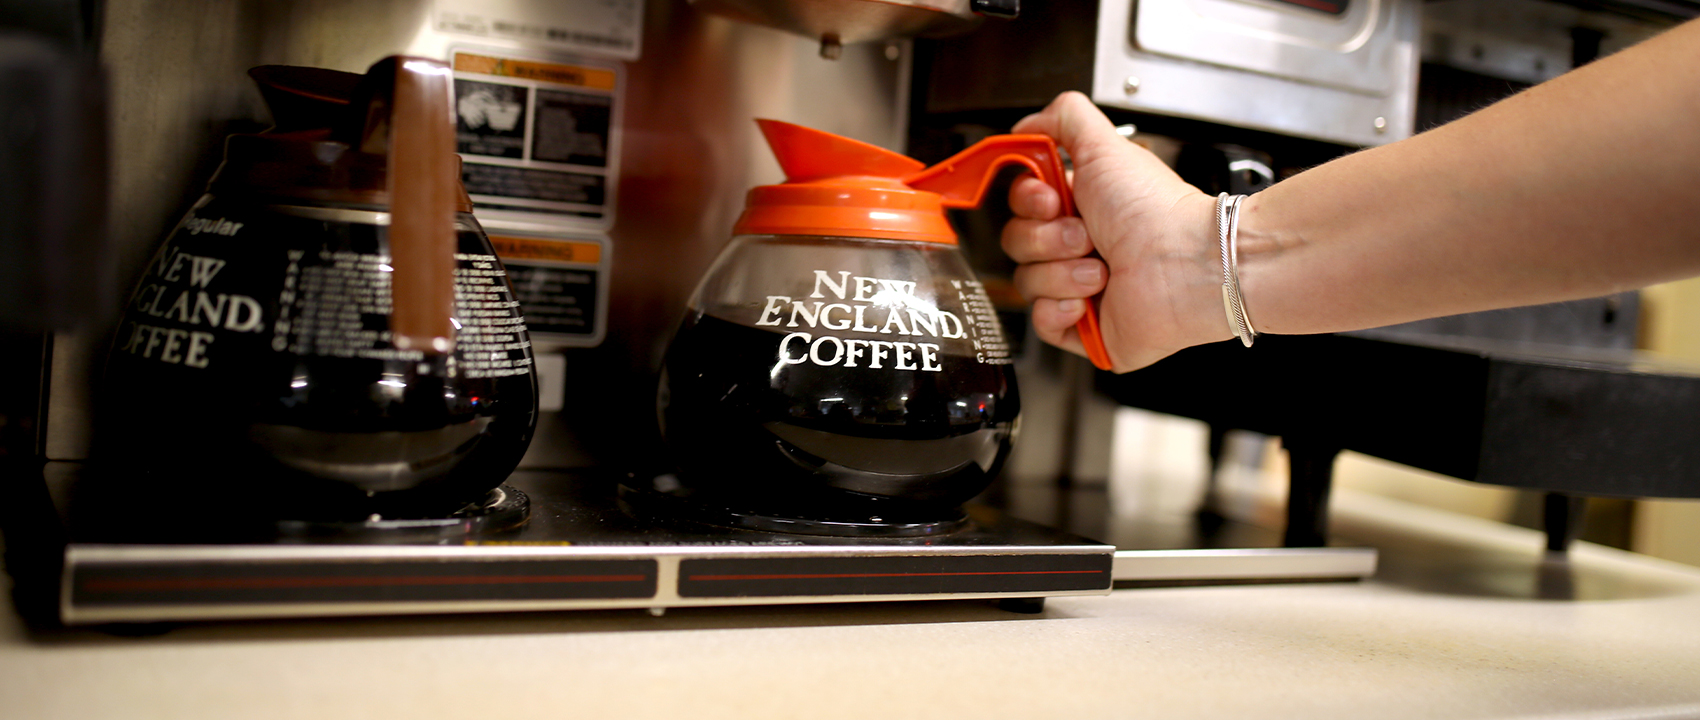 New England Coffee machine